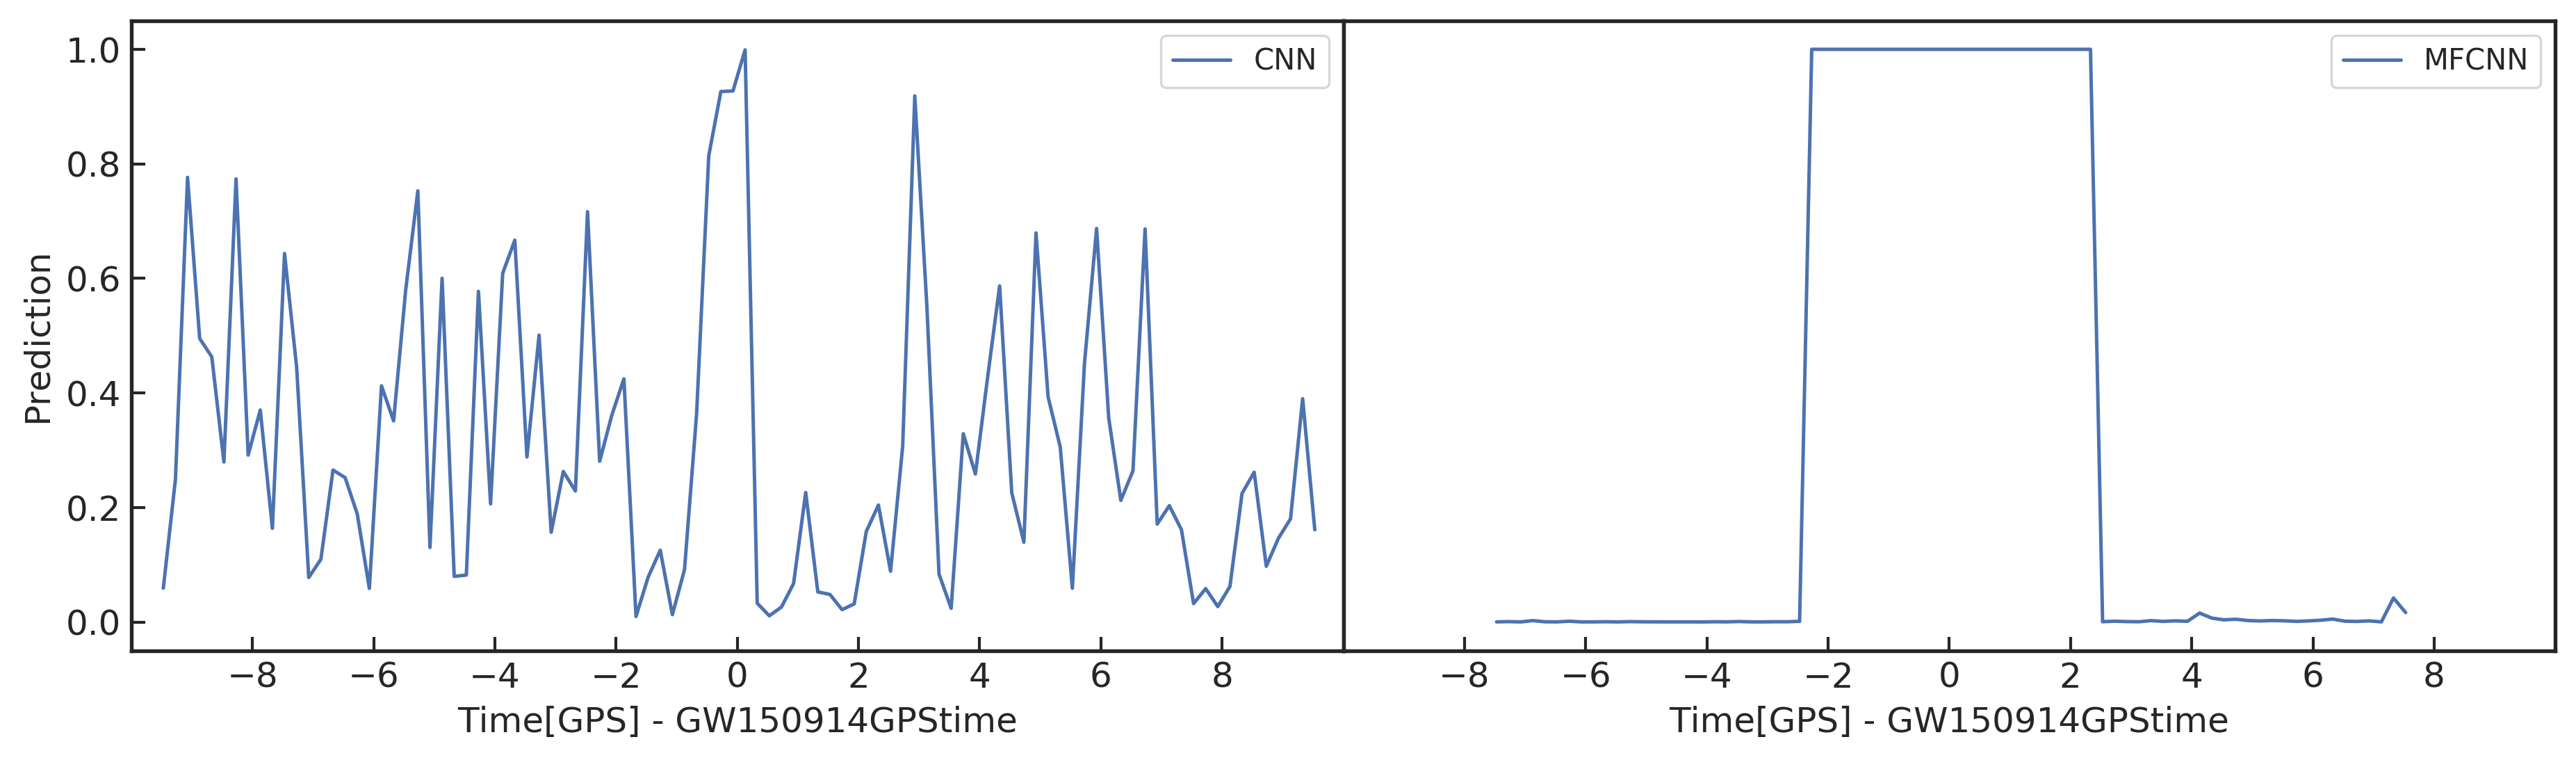 GW150914 引力波事件附近 10 秒真实 LIGO 数据分别根据 CNN (左) 和 MFCNN (右) 网络模型的预测结果对比图